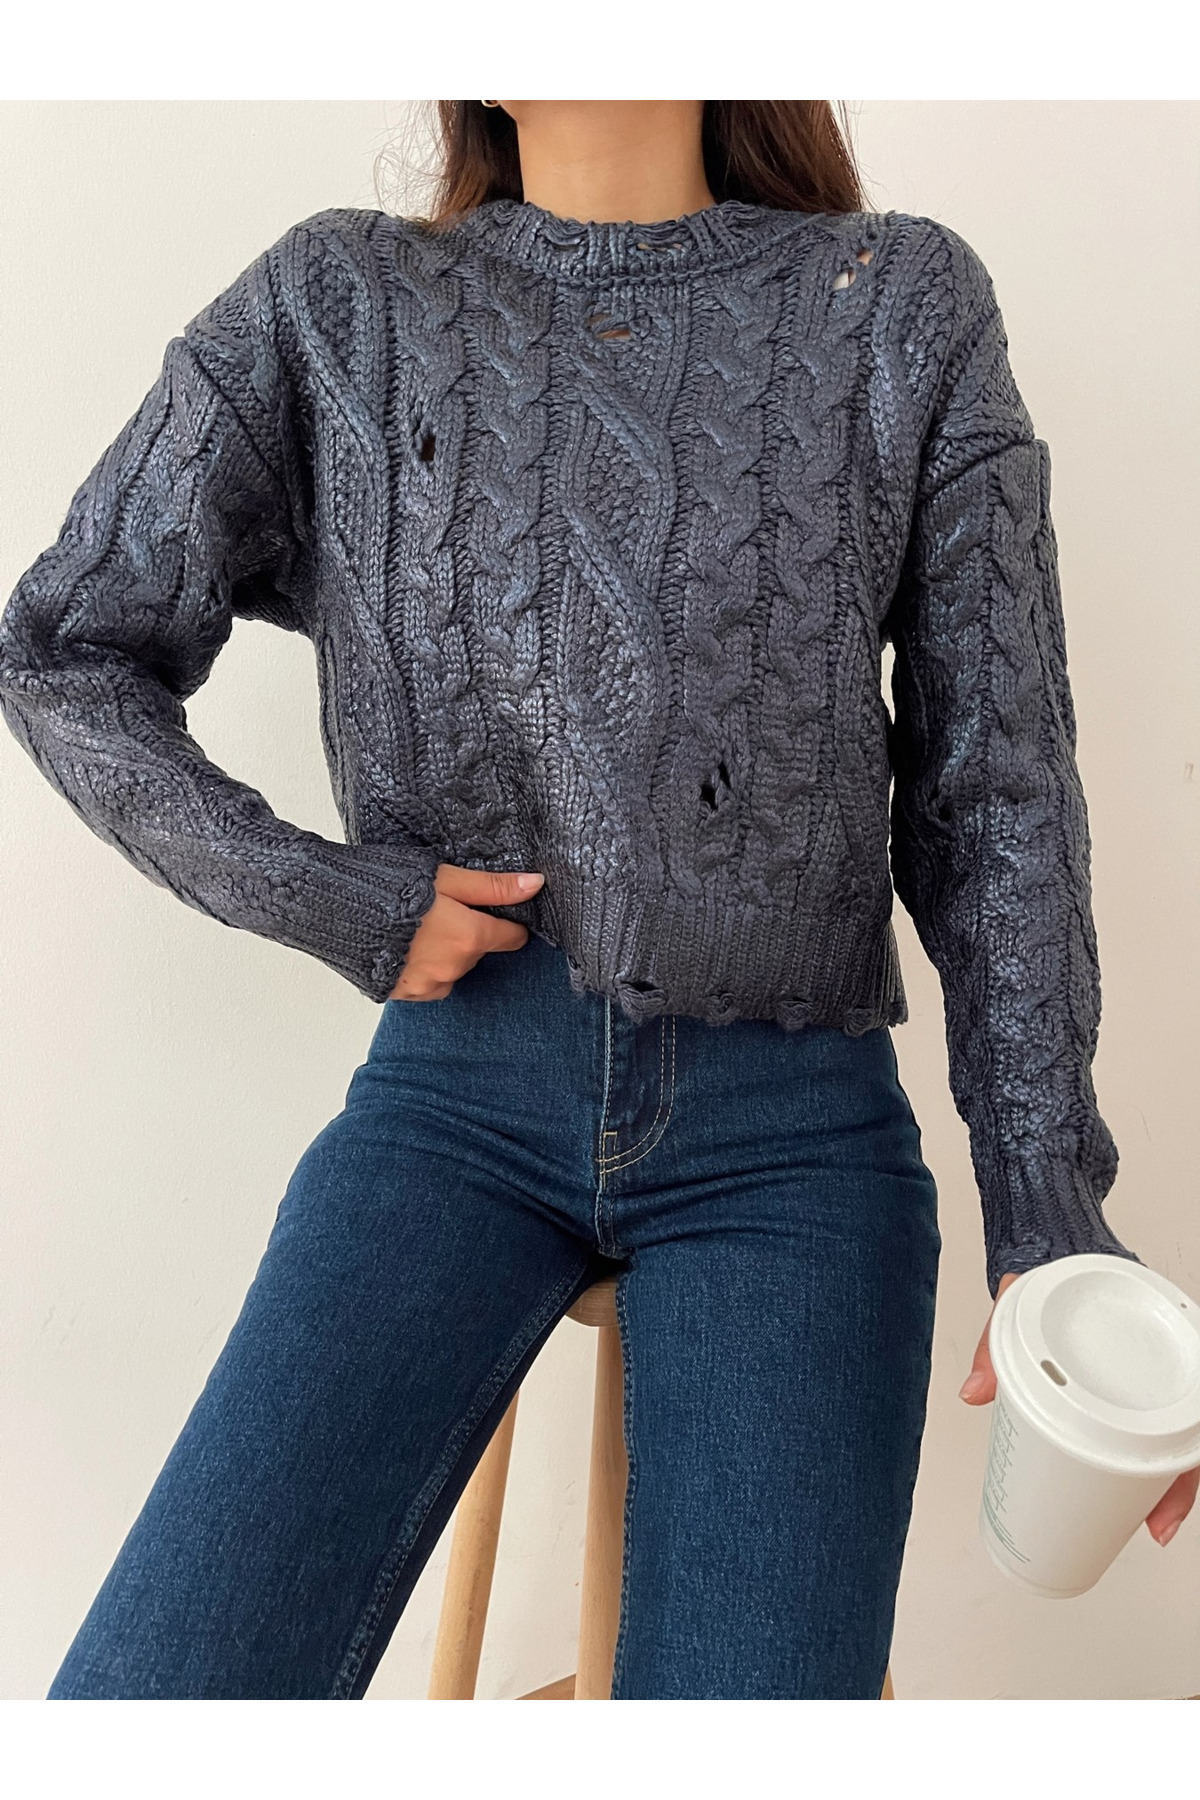 Laluvia Indigo Foil Print Ripped Detailed Sweater